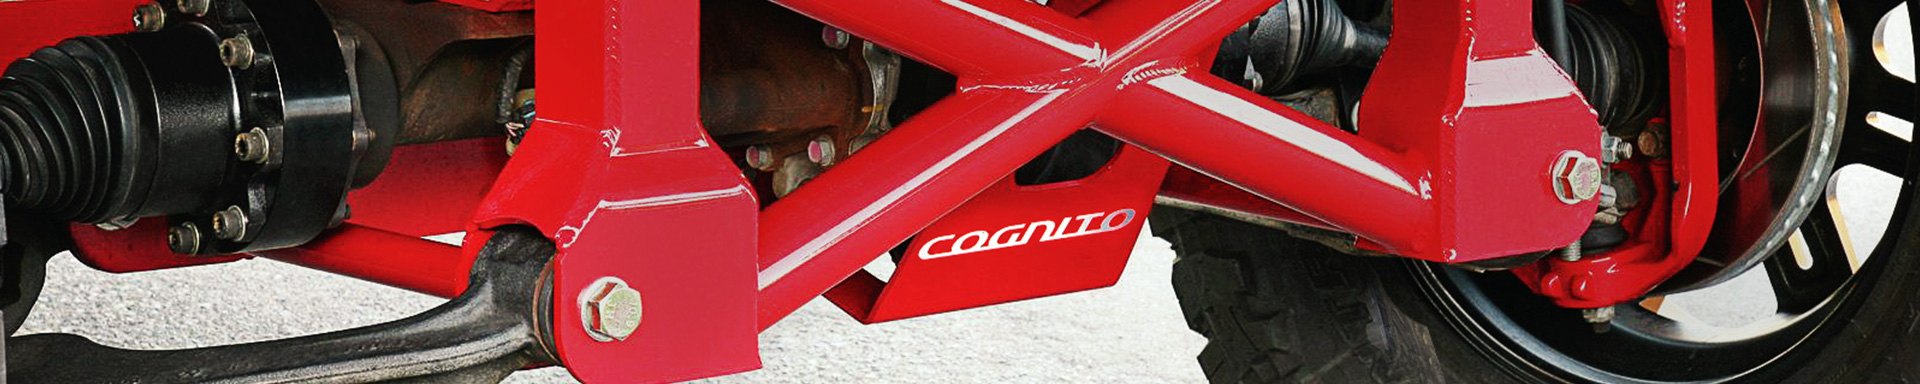 Cognito Motorsports Brakes